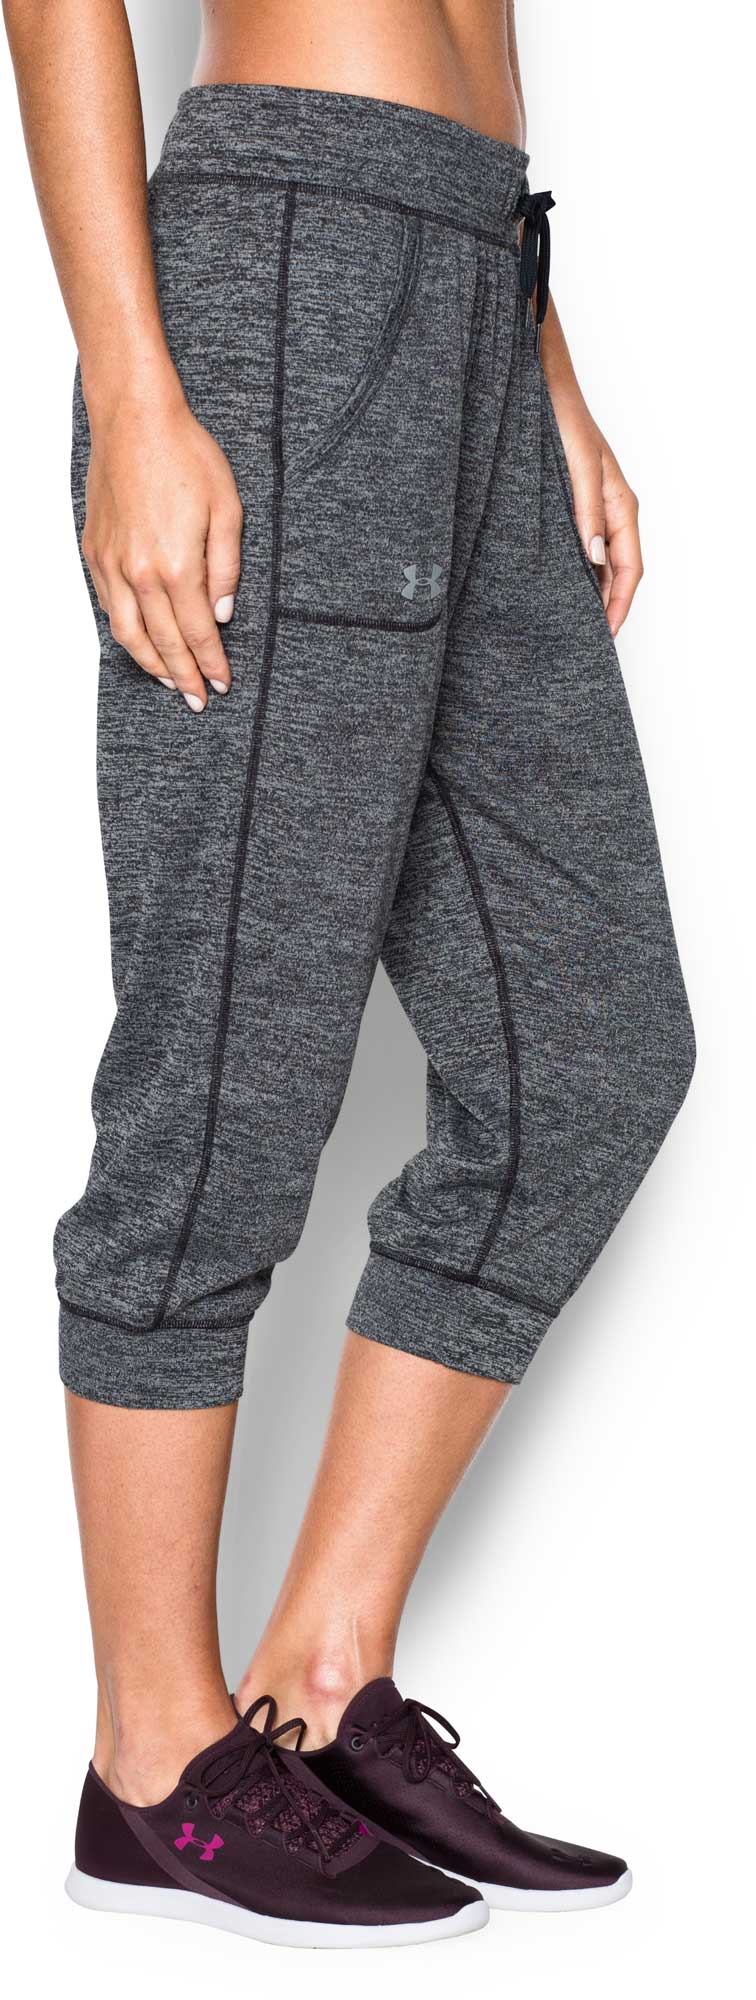 Women’s 3/4 length sweatpants